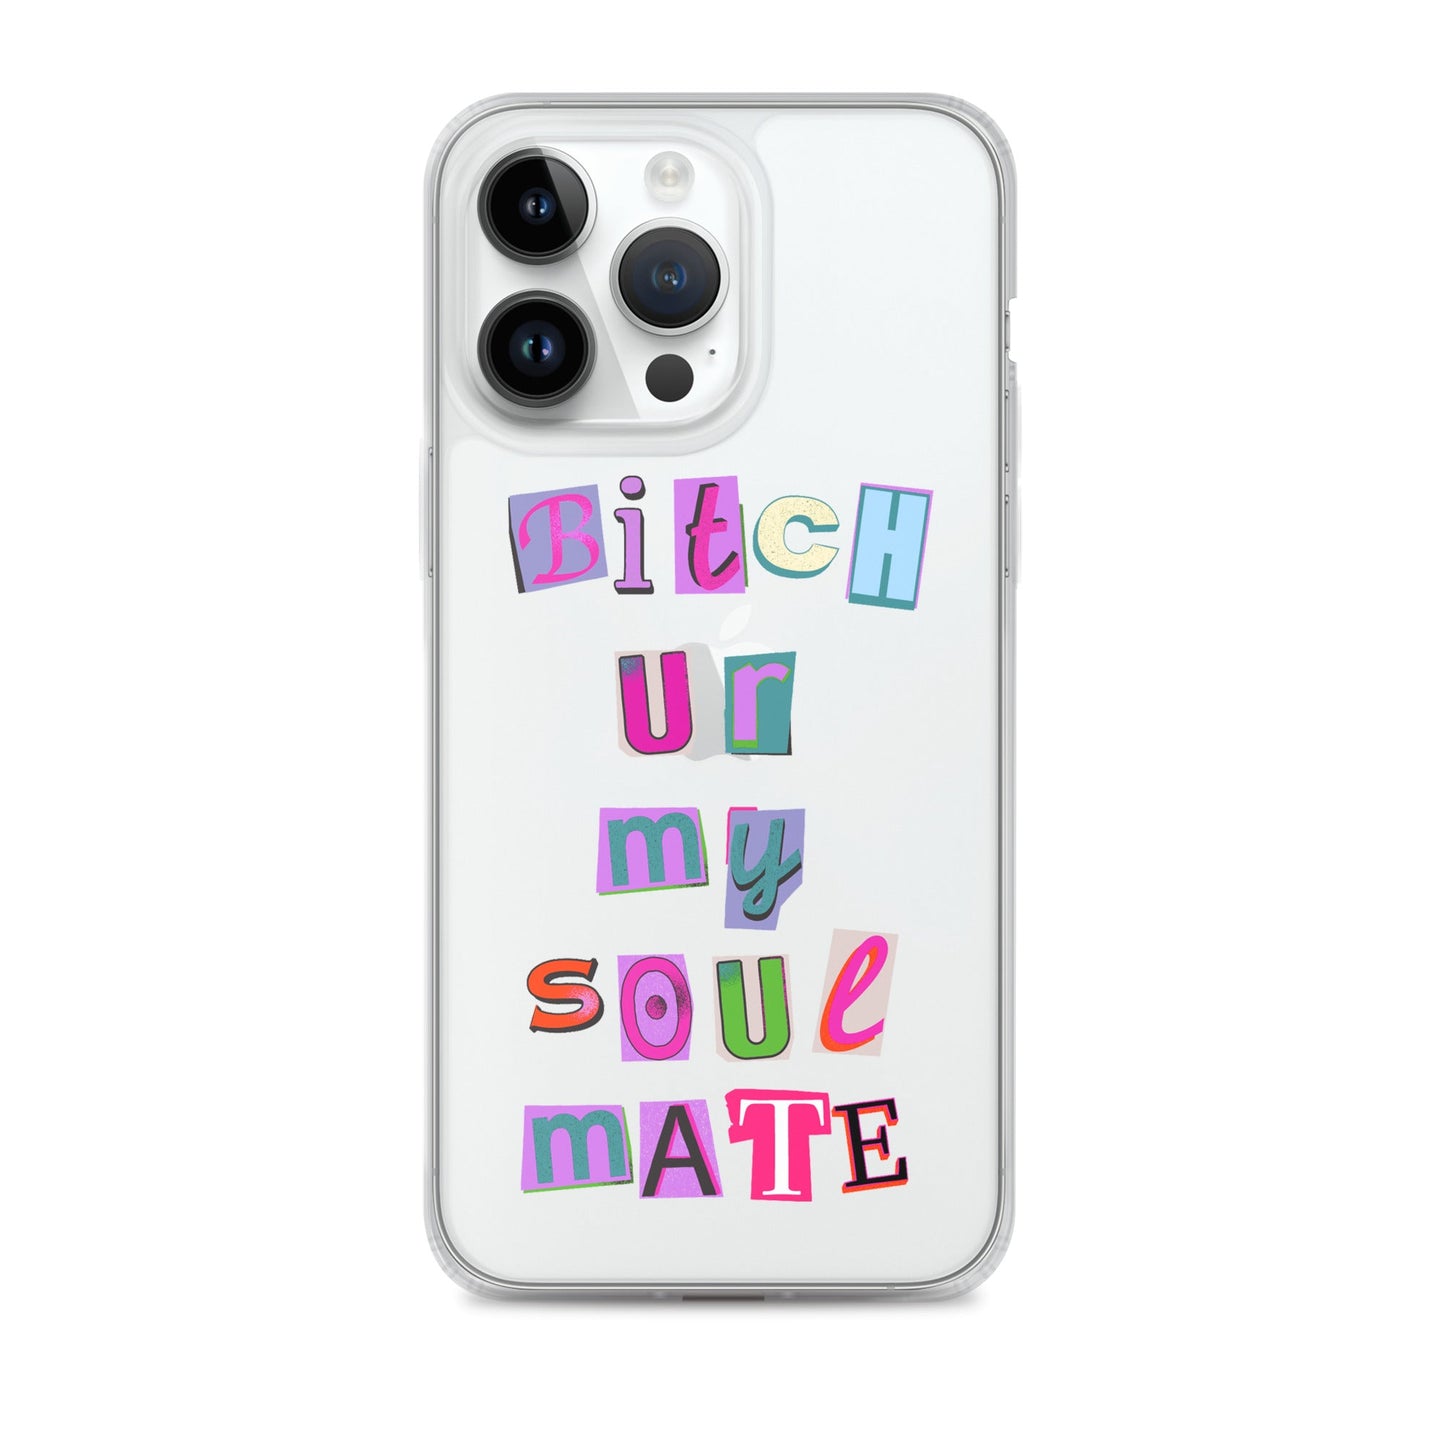 Soulmate iPhone Case - blunt cases